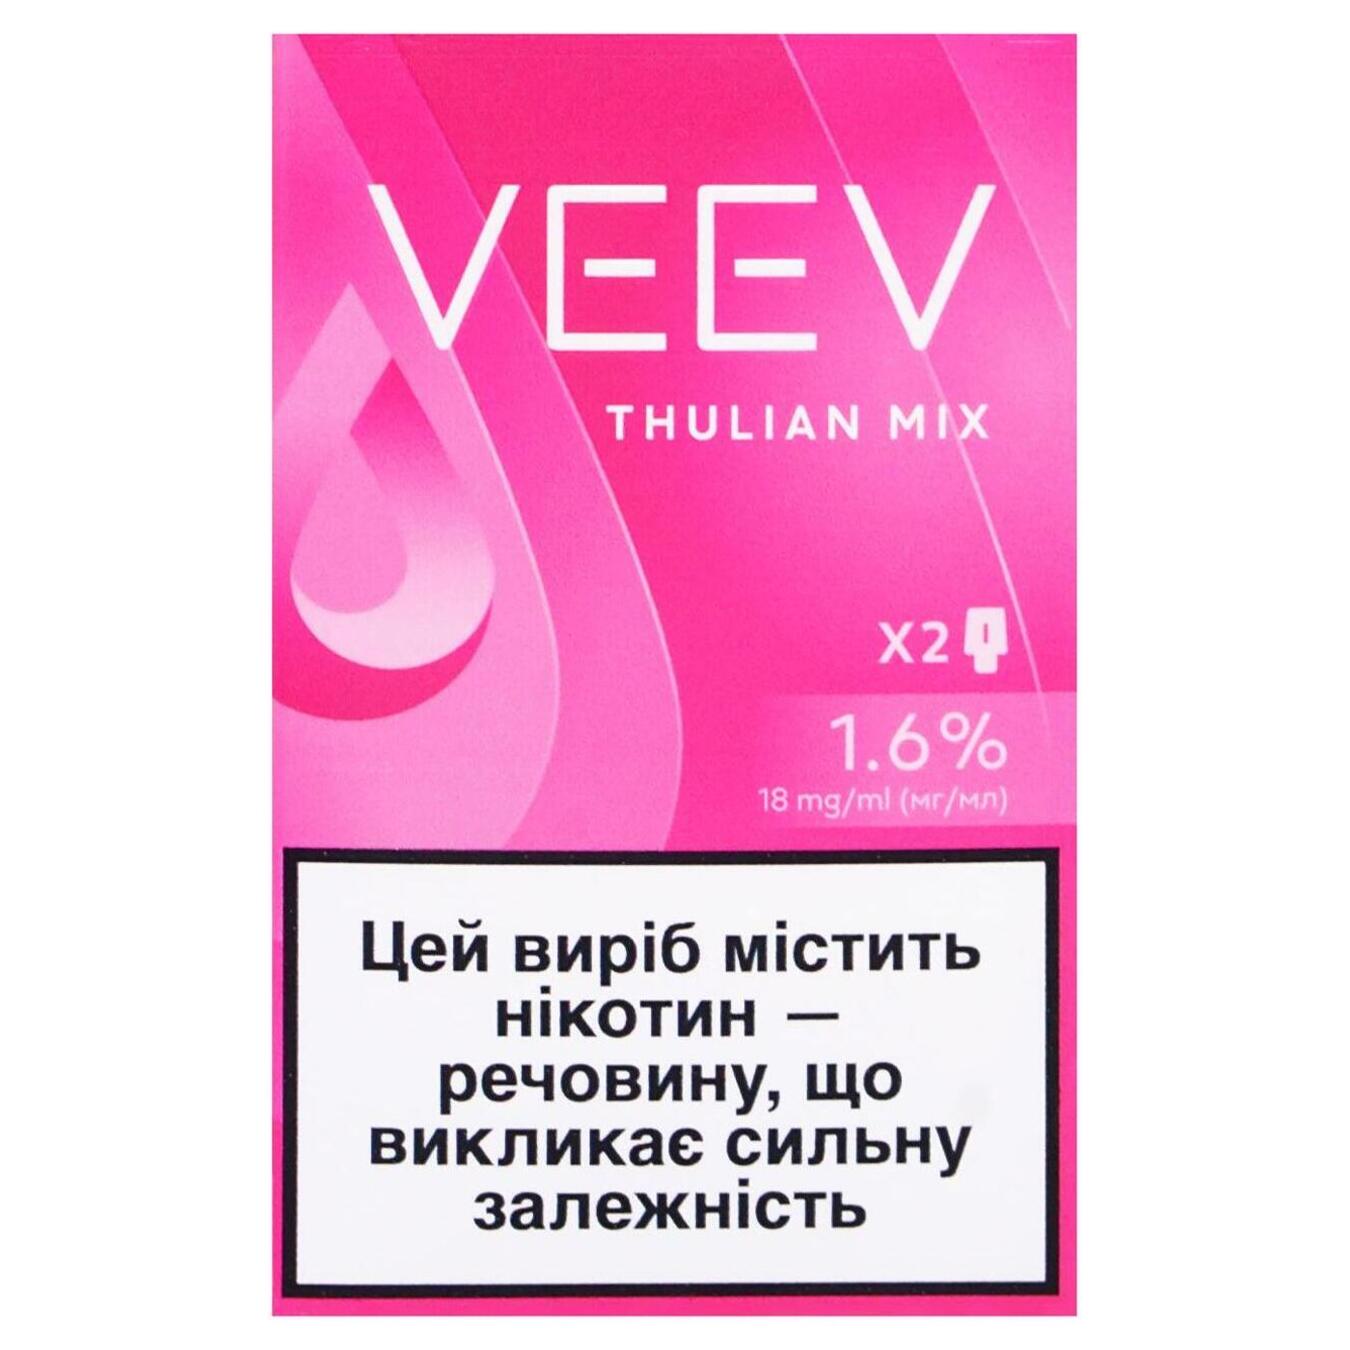 Картридж VEEV Thulian Mix 1,6% (ціна вказана без акцизу)